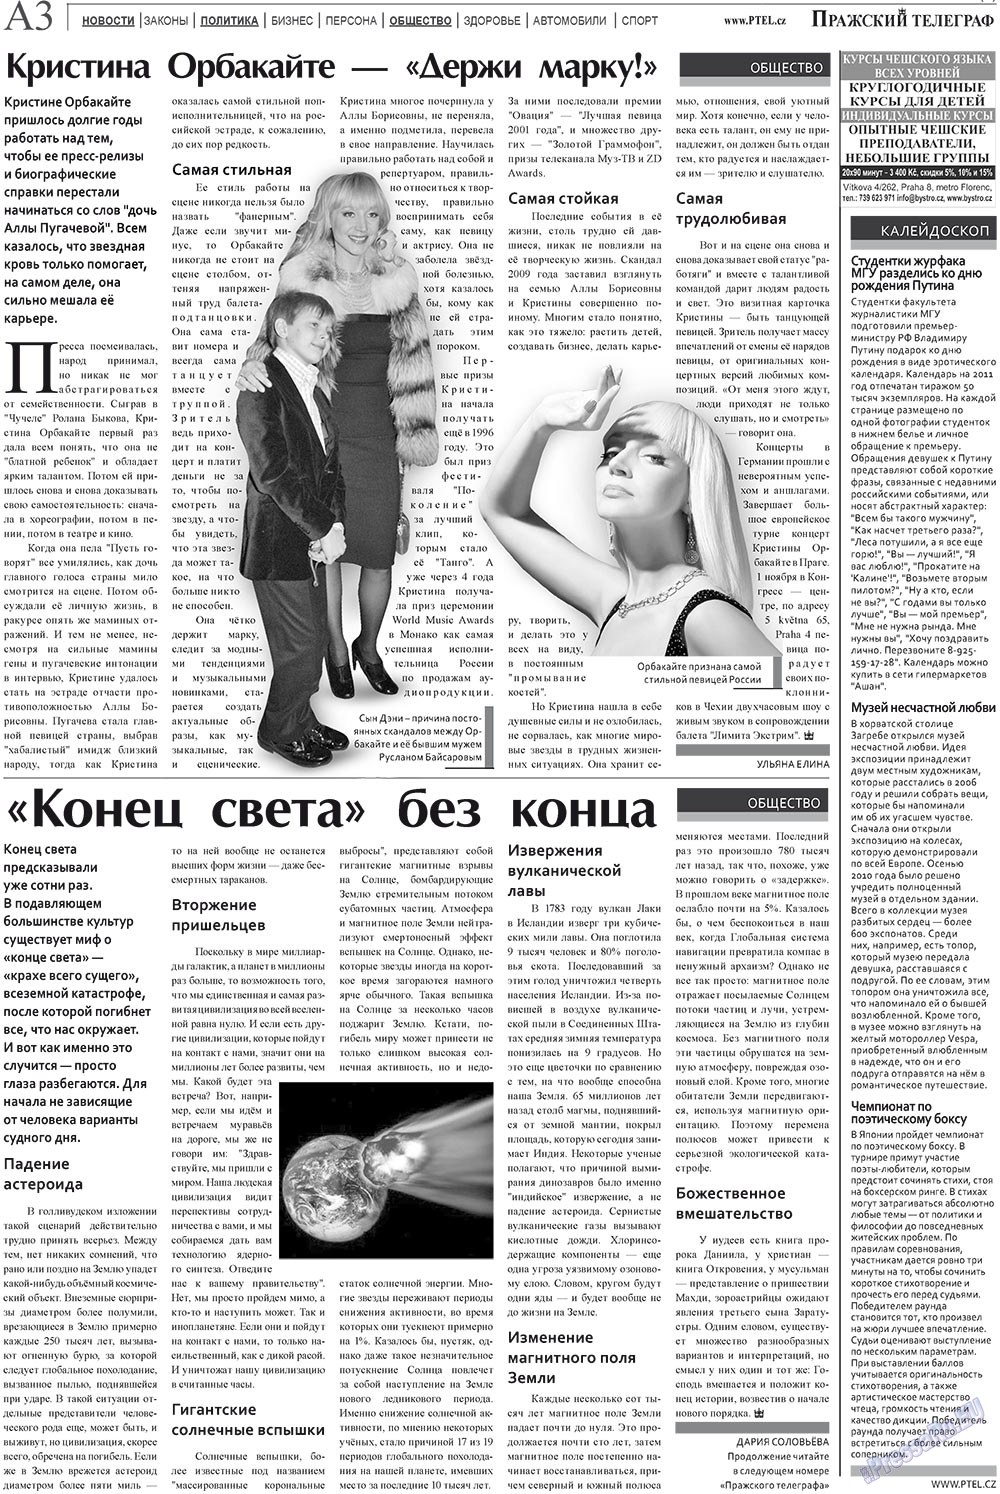 Пражский телеграф, газета. 2010 №41 стр.3